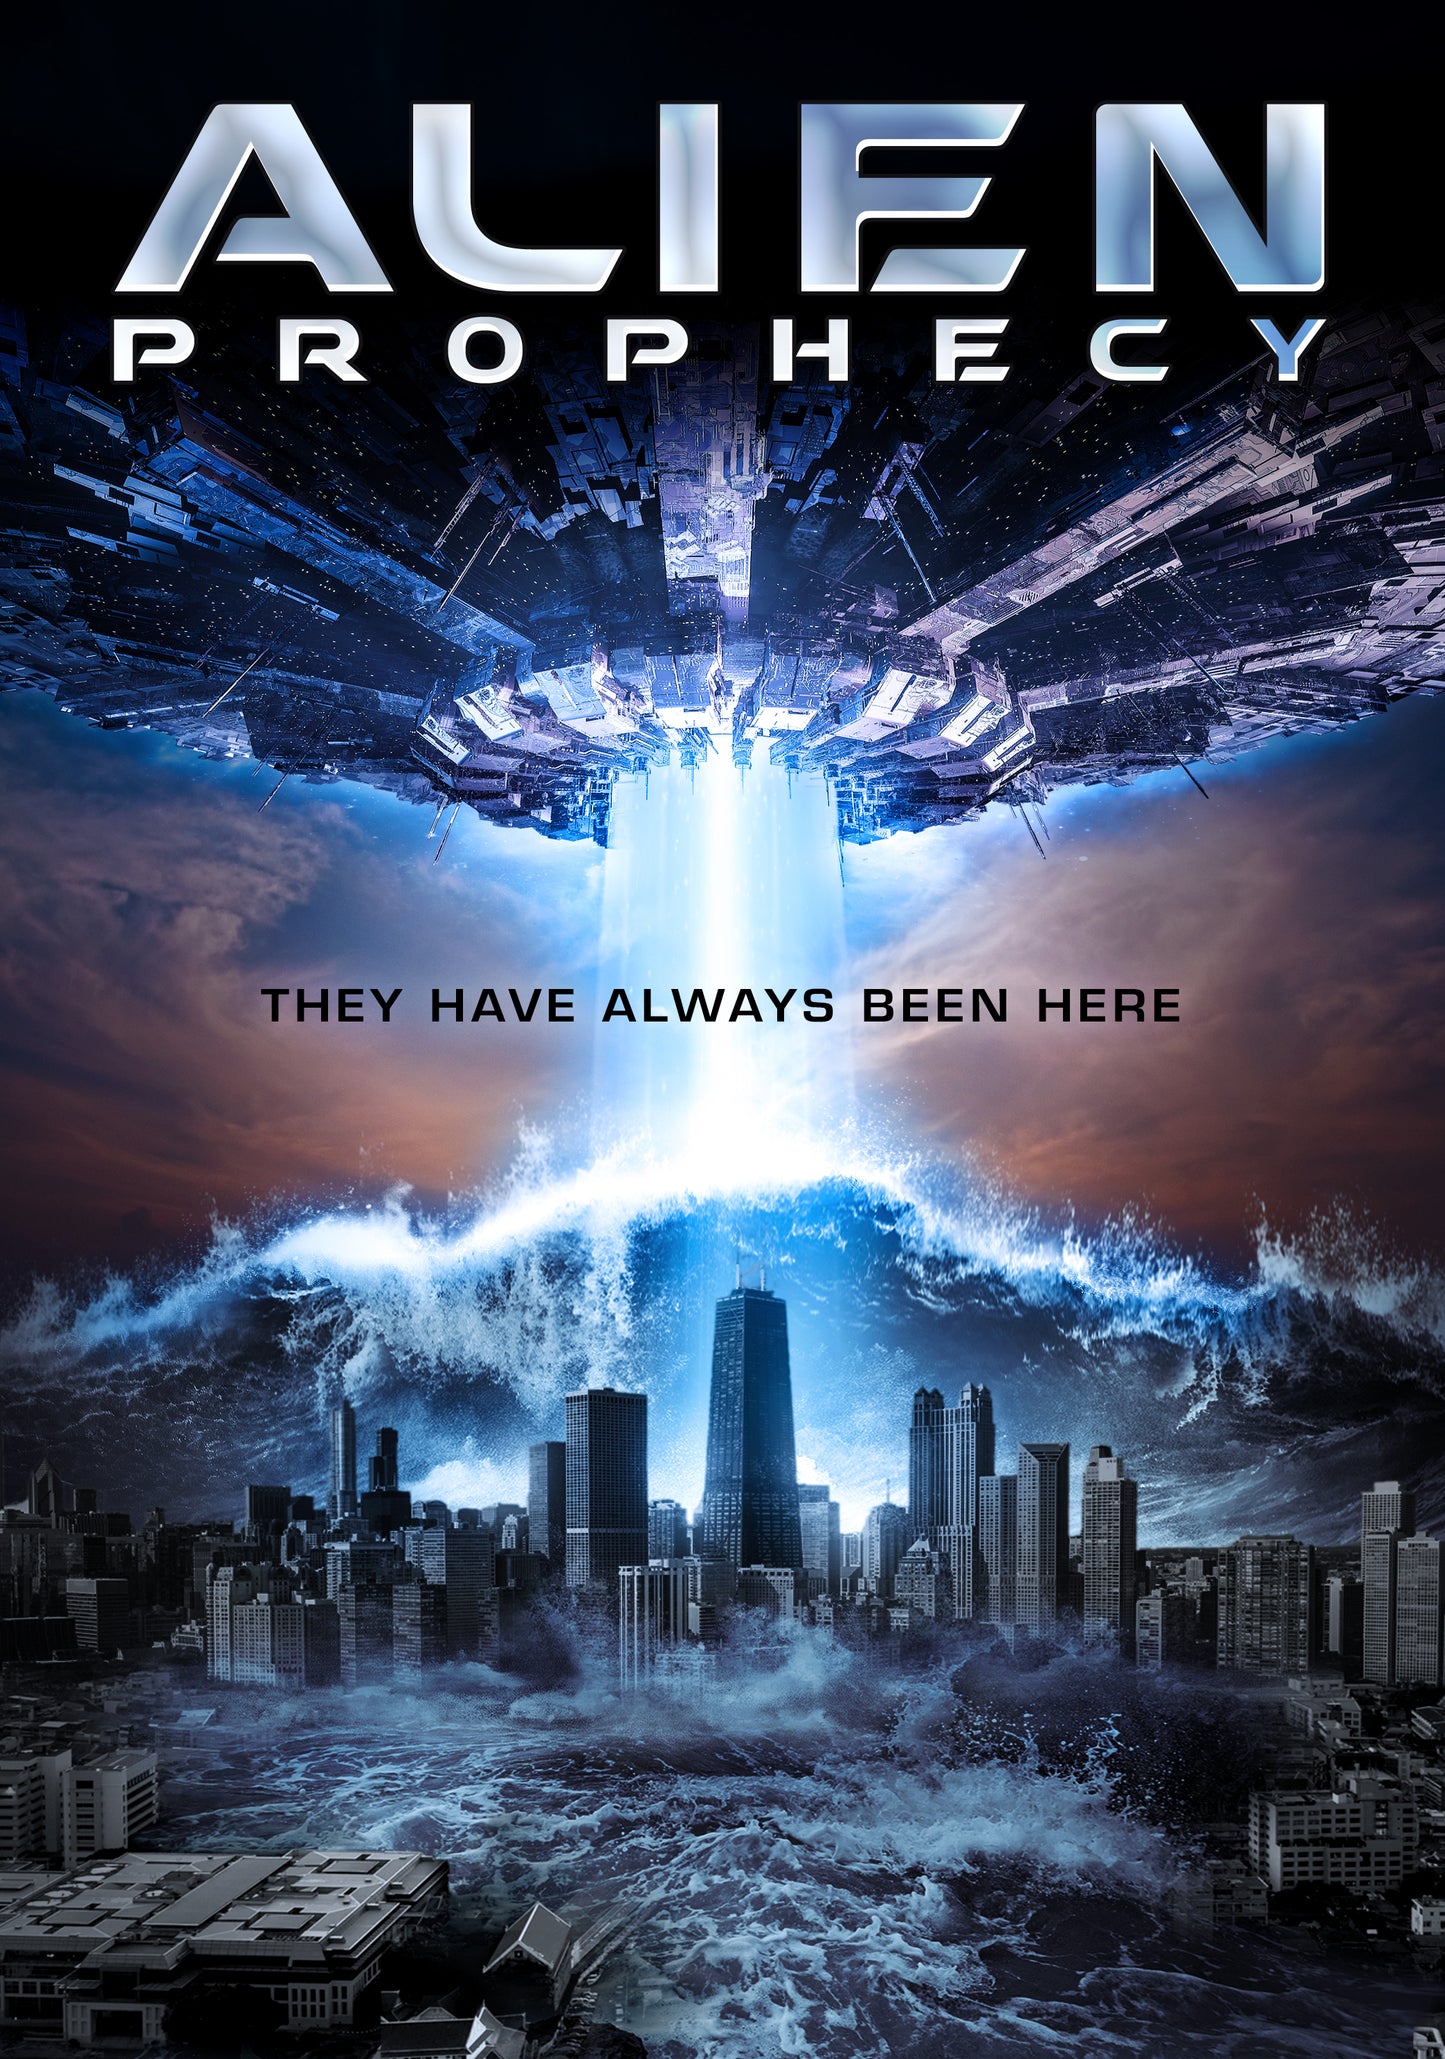 Alien Prophecy cover art